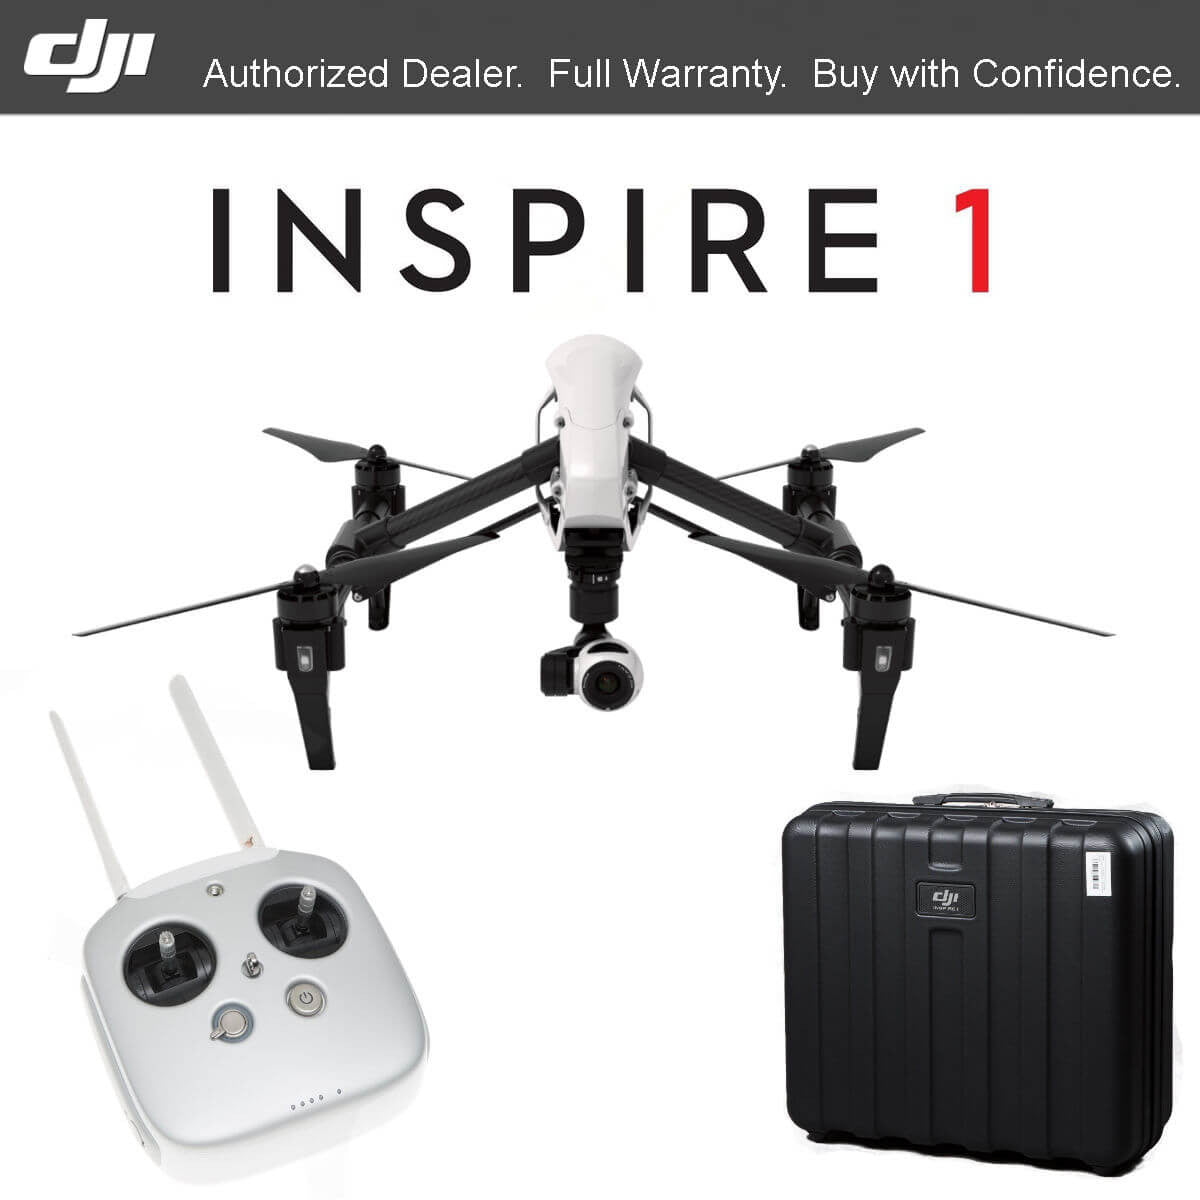 inspire 1 drone price